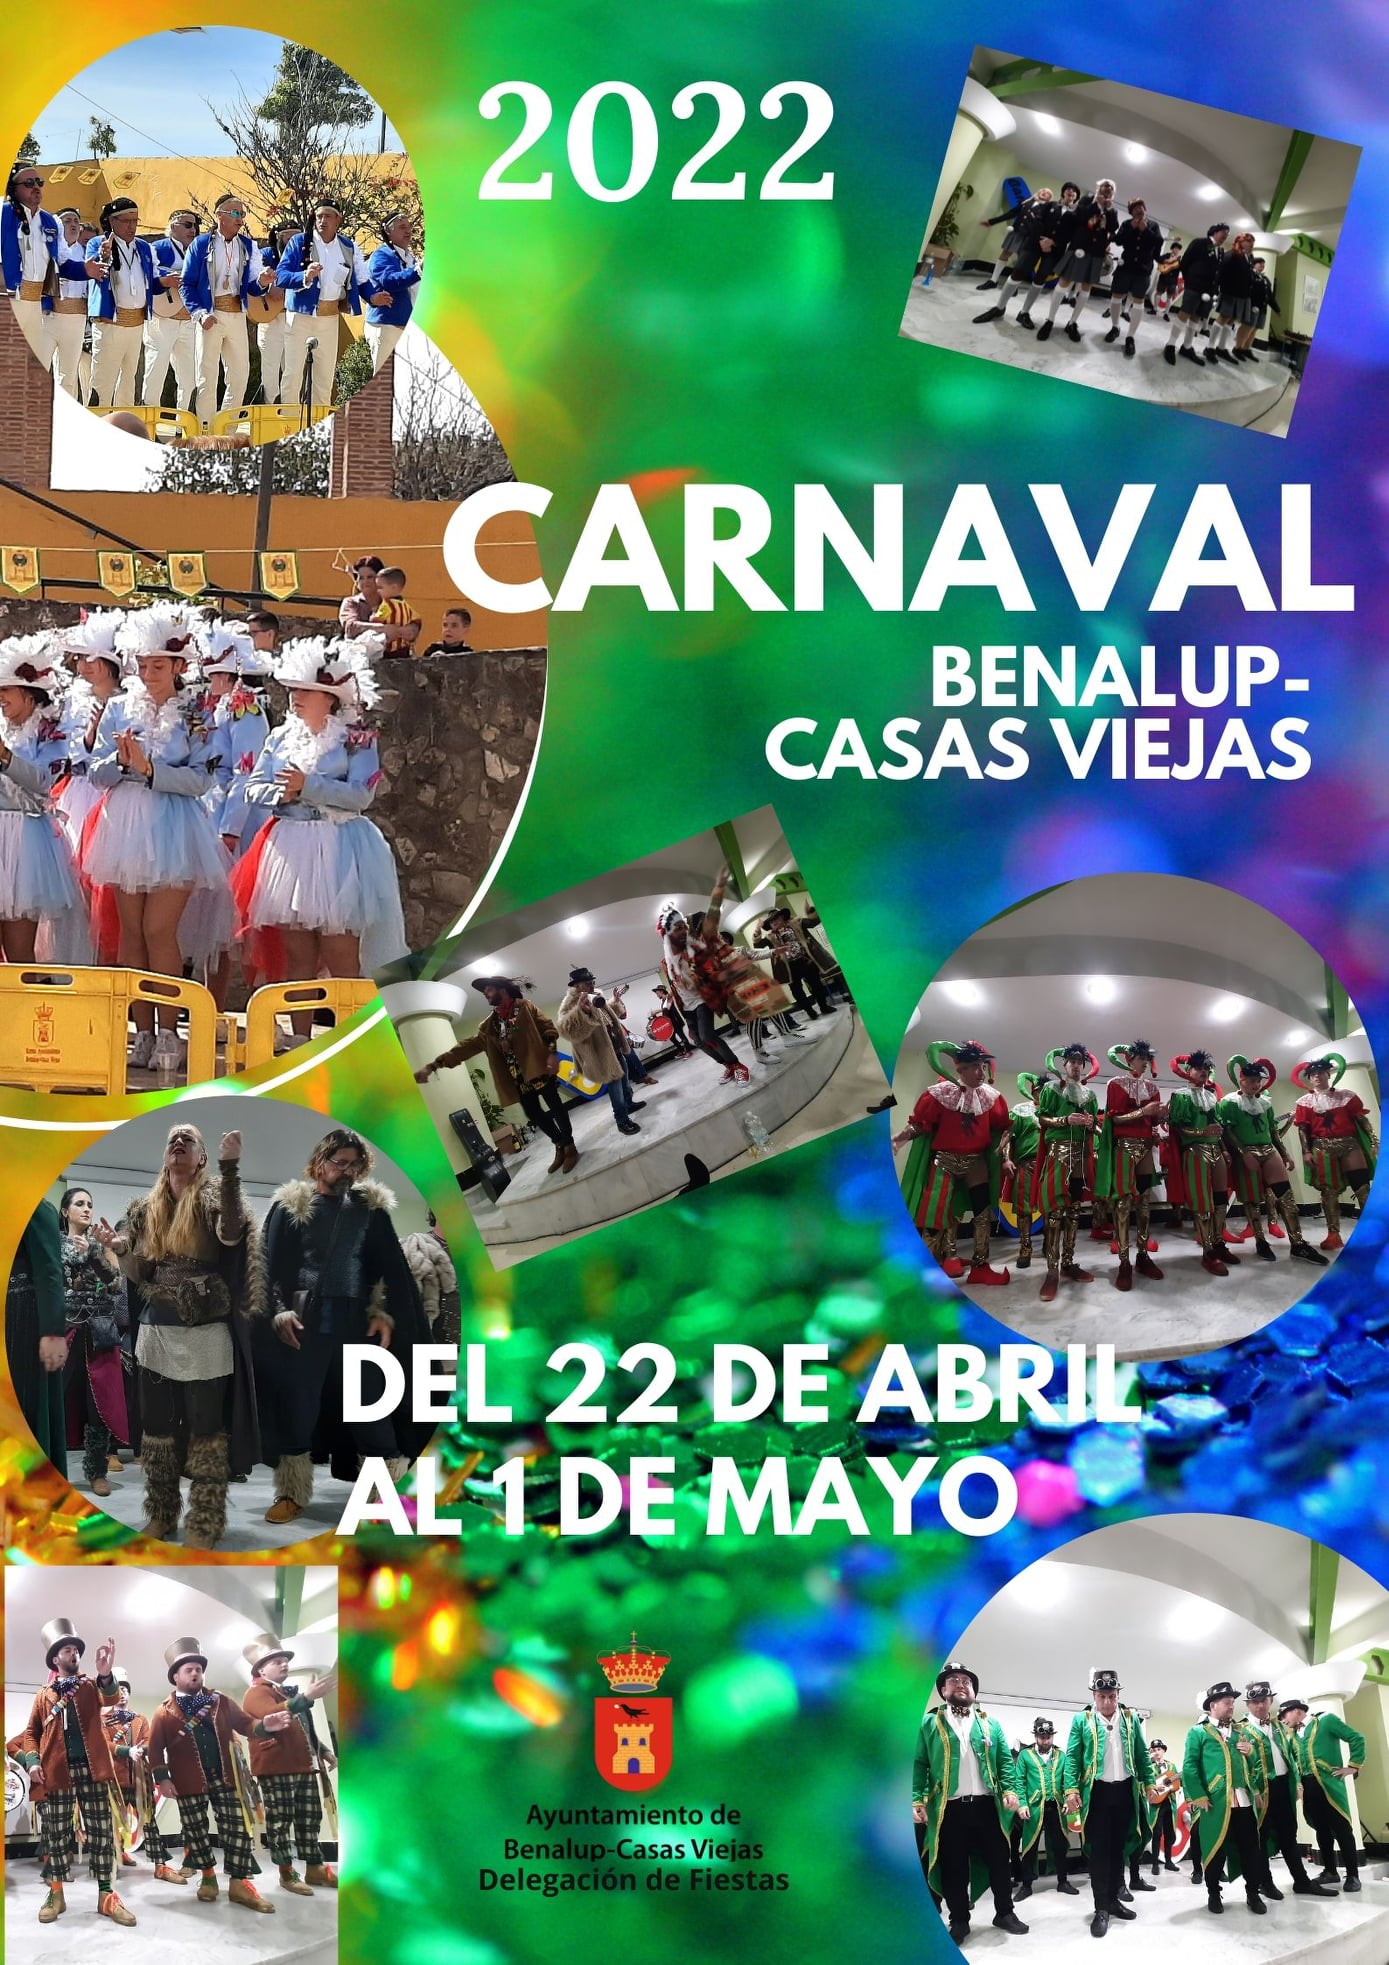 sites/default/files/2022/AGENDA/carnaval/carnaval-benalup-cartel.jpg